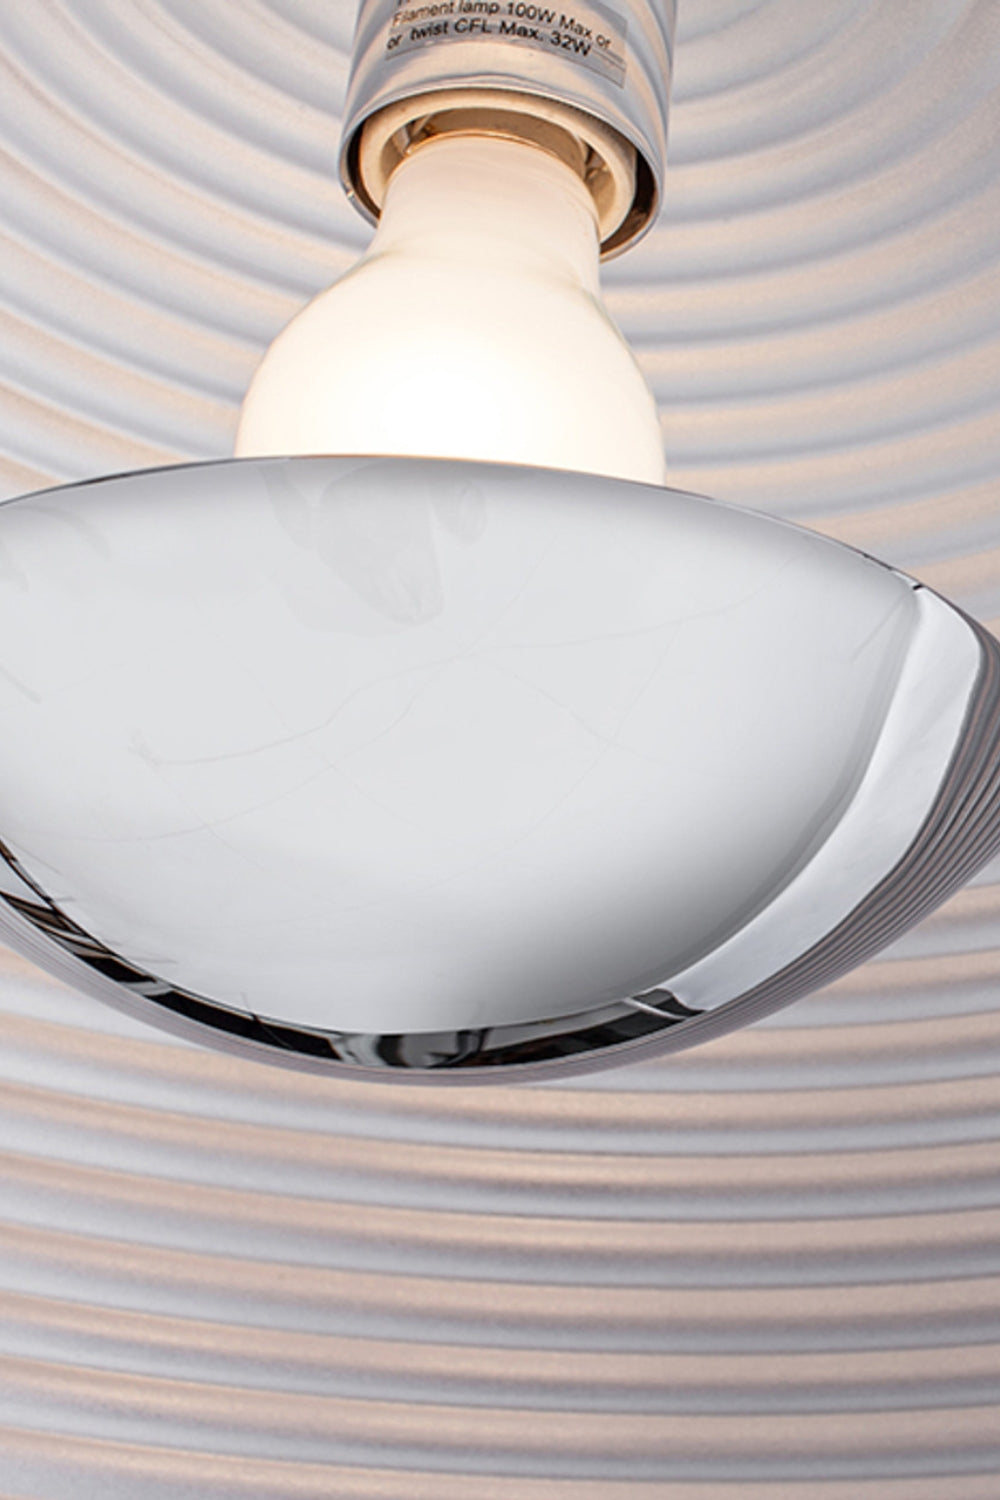 Seed Dome Pendant Light - SamuLighting